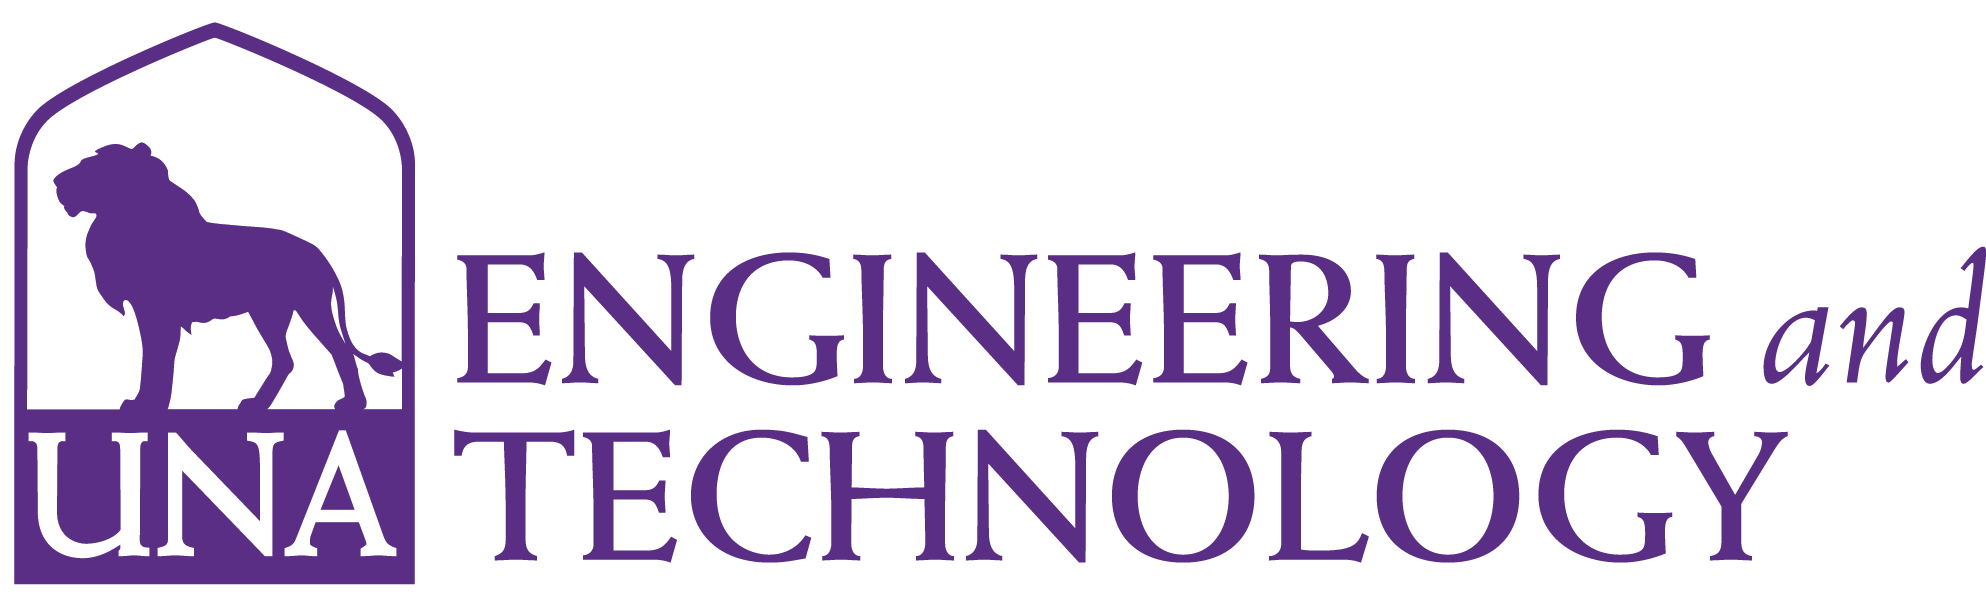 engineering technology logo 3